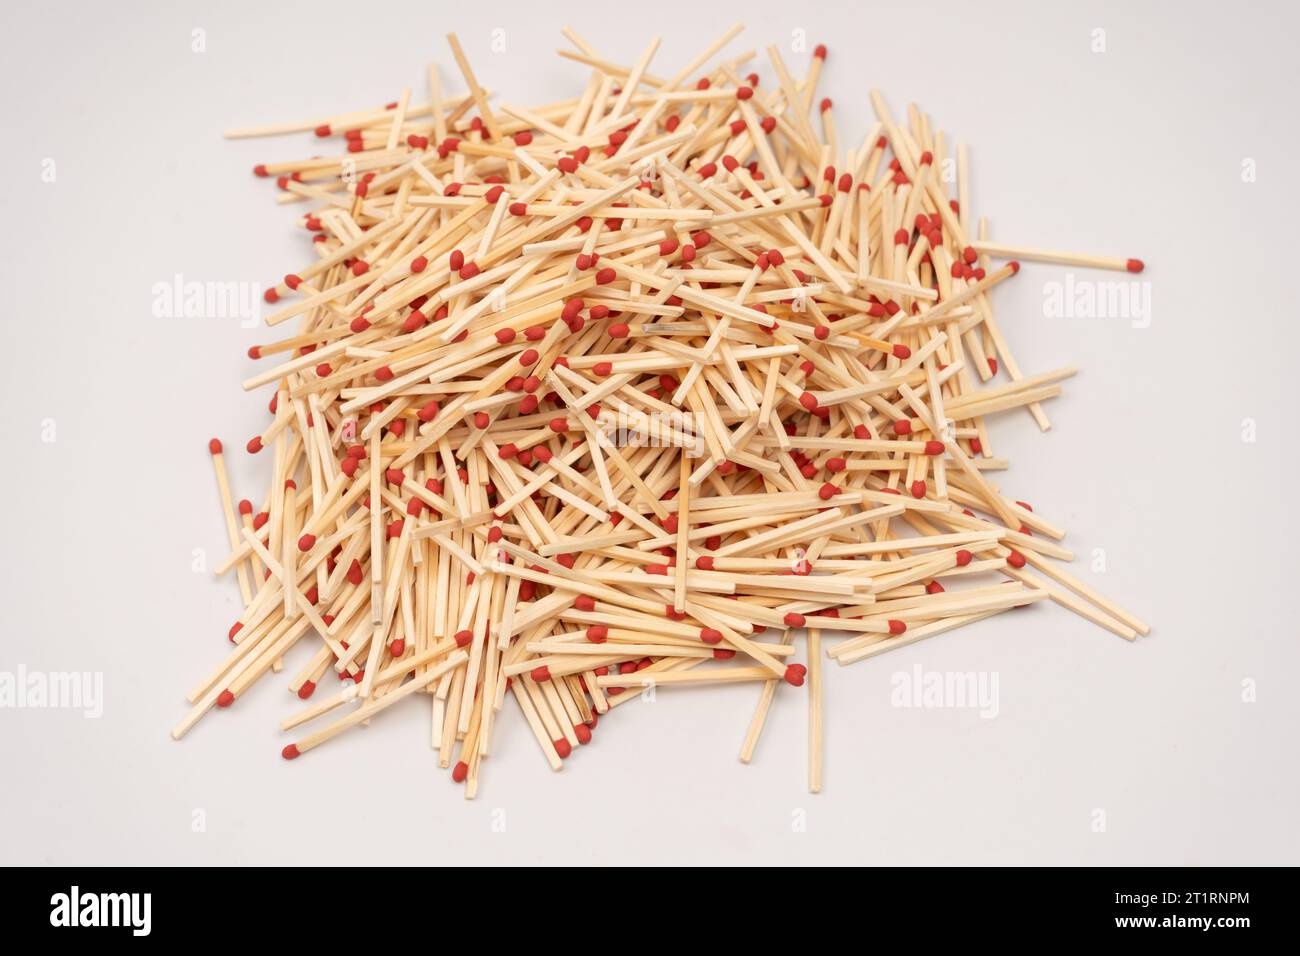 Pile of matchsticks Stock Photo - Alamy